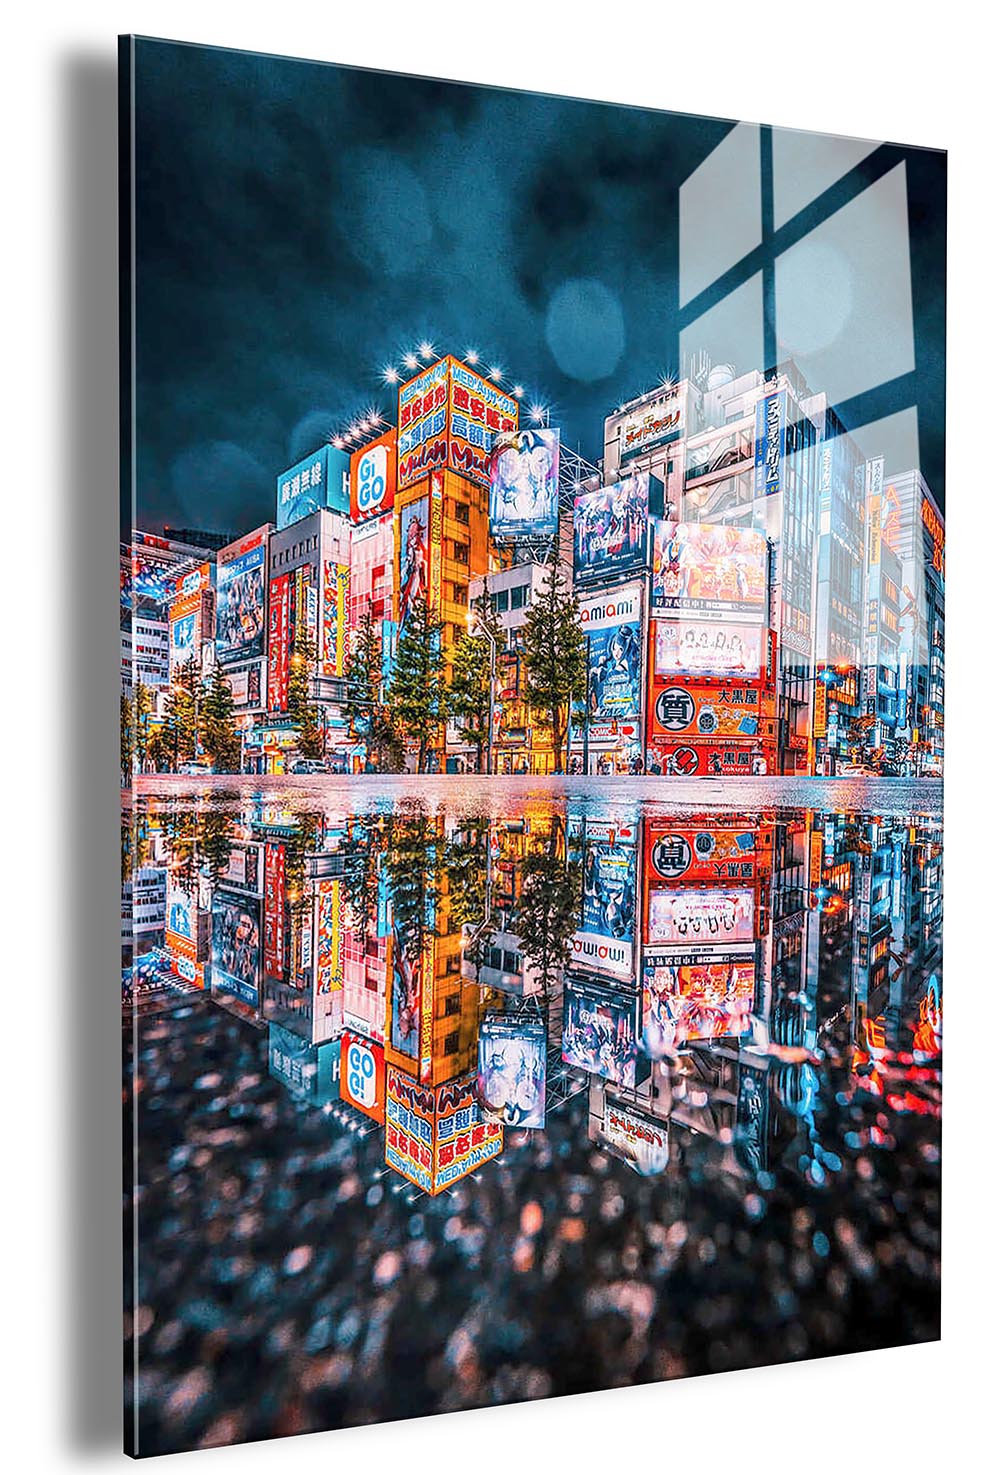 Cyberpunk Tokyo – gallerypanda